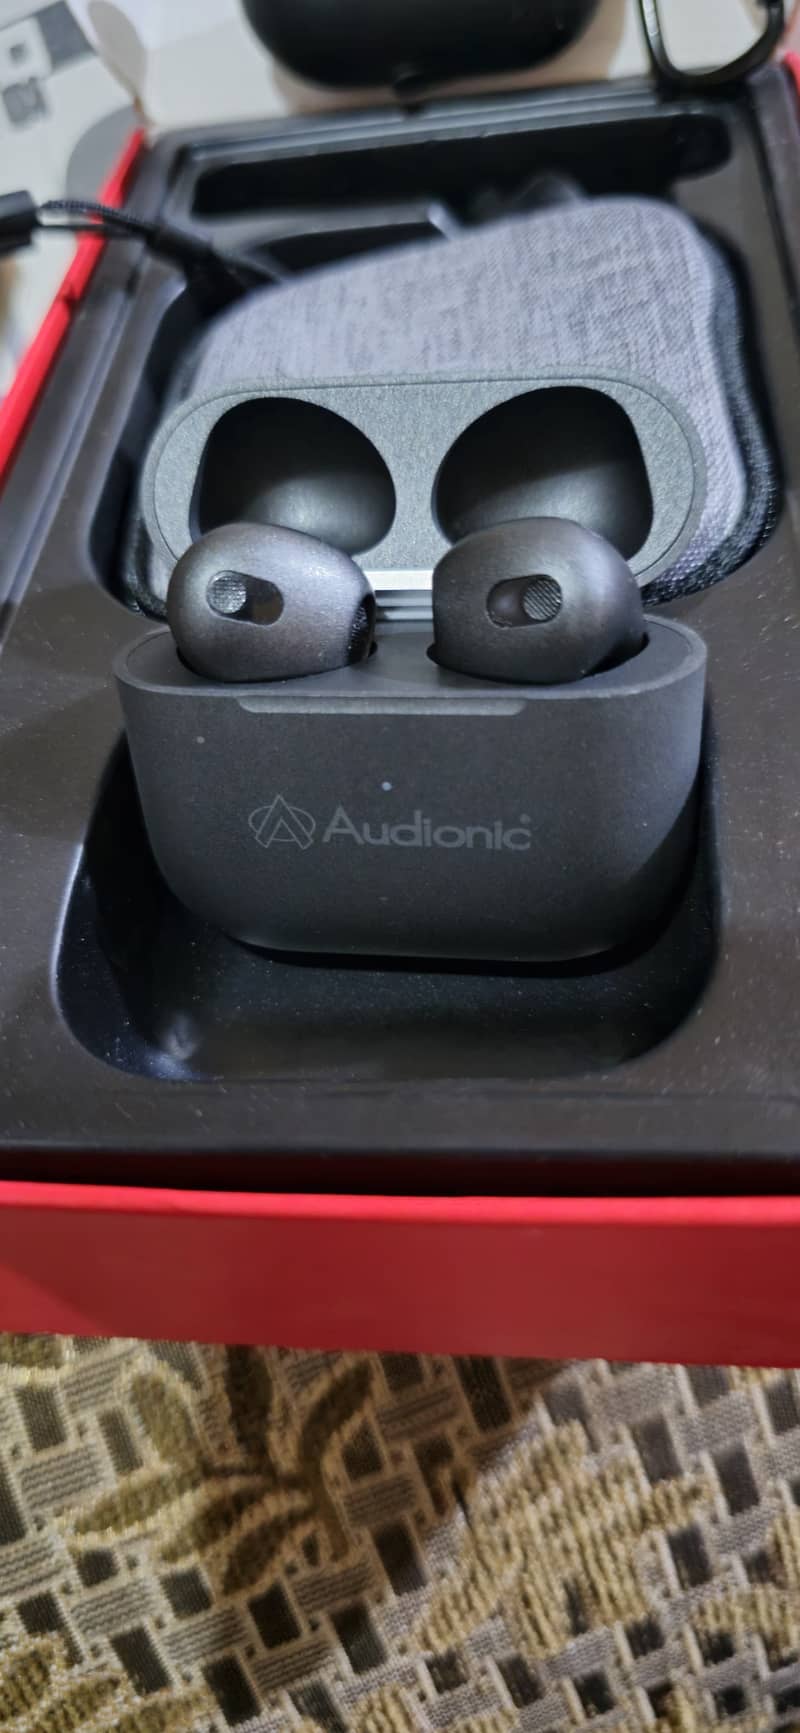 Audionic Airbud 5 Max 0